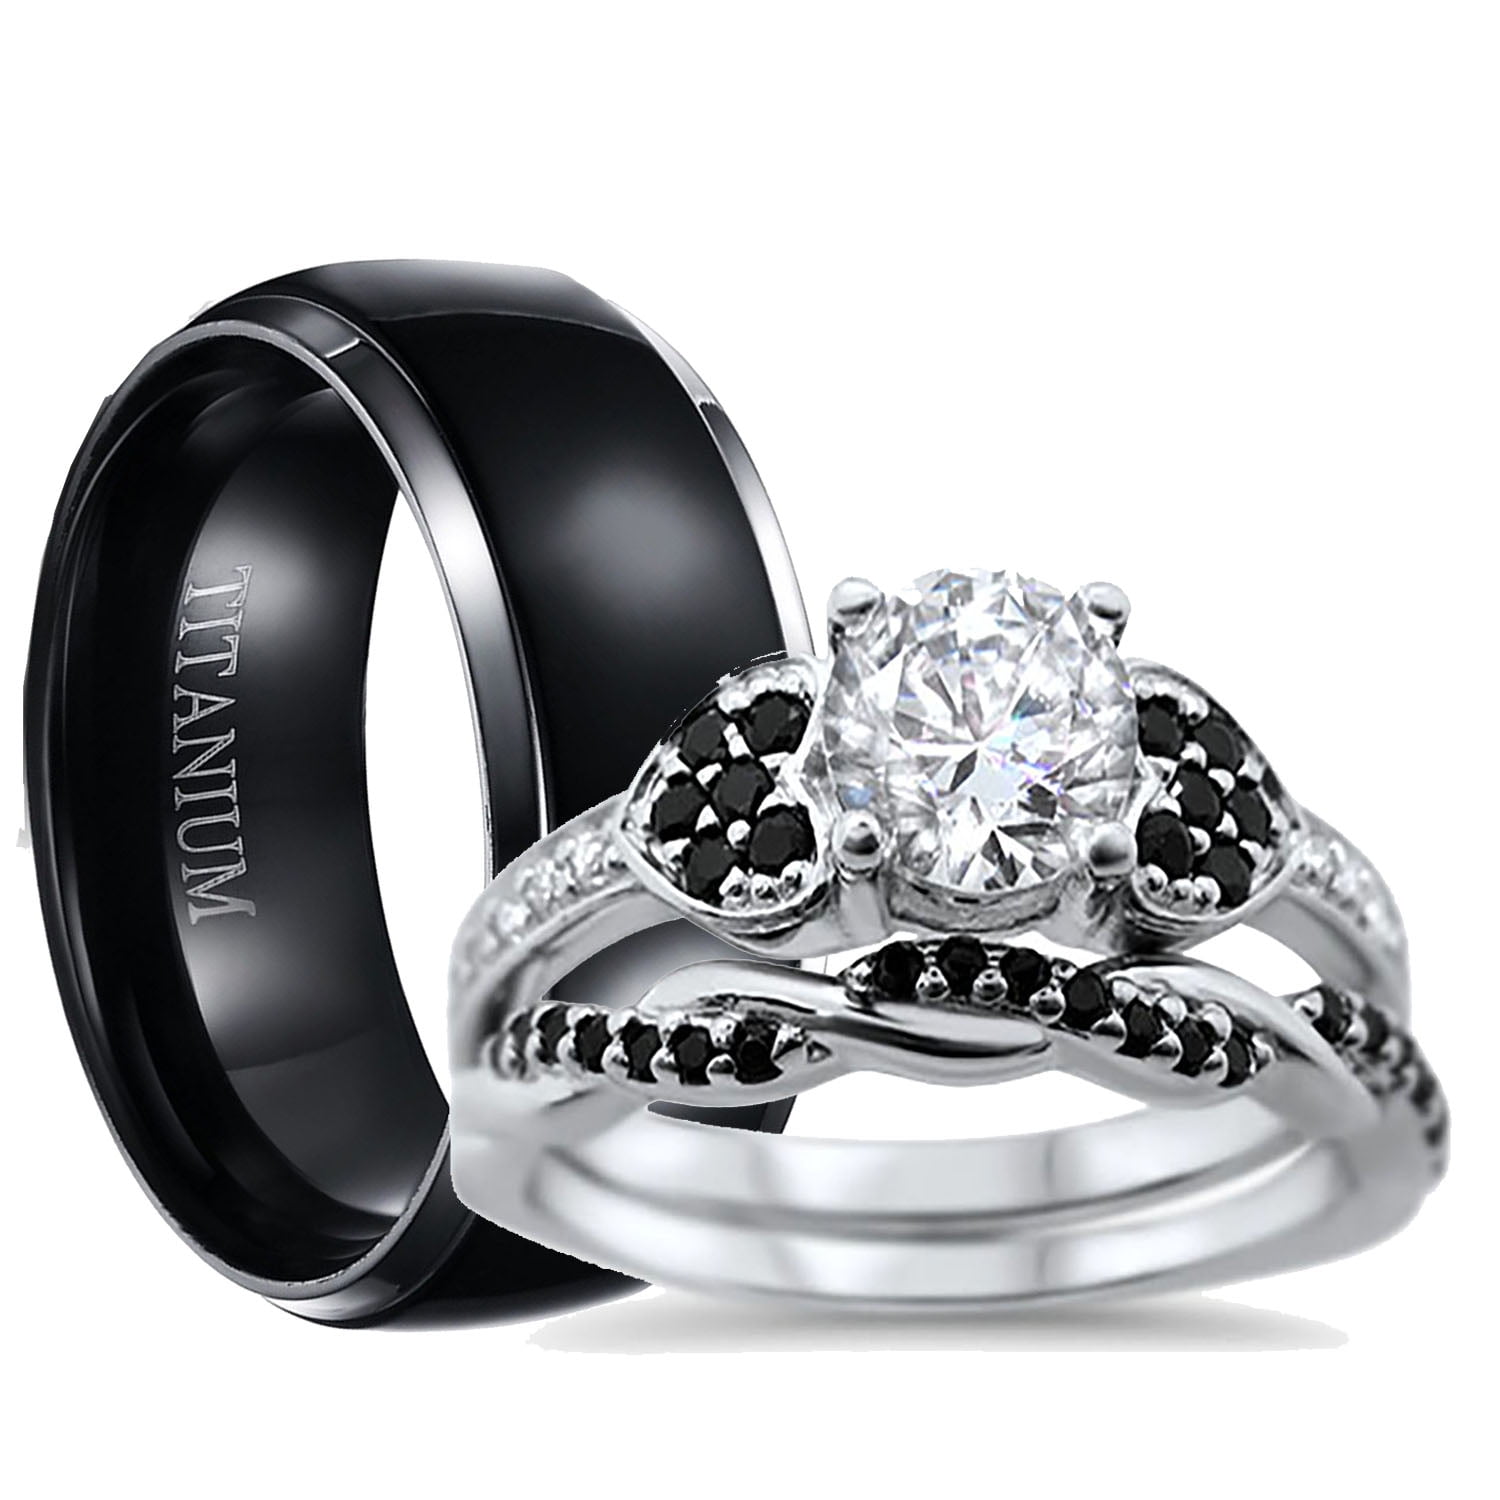 Meteorite and Wood Titanium Wedding Rings Set | D-Color VVS1 Certified